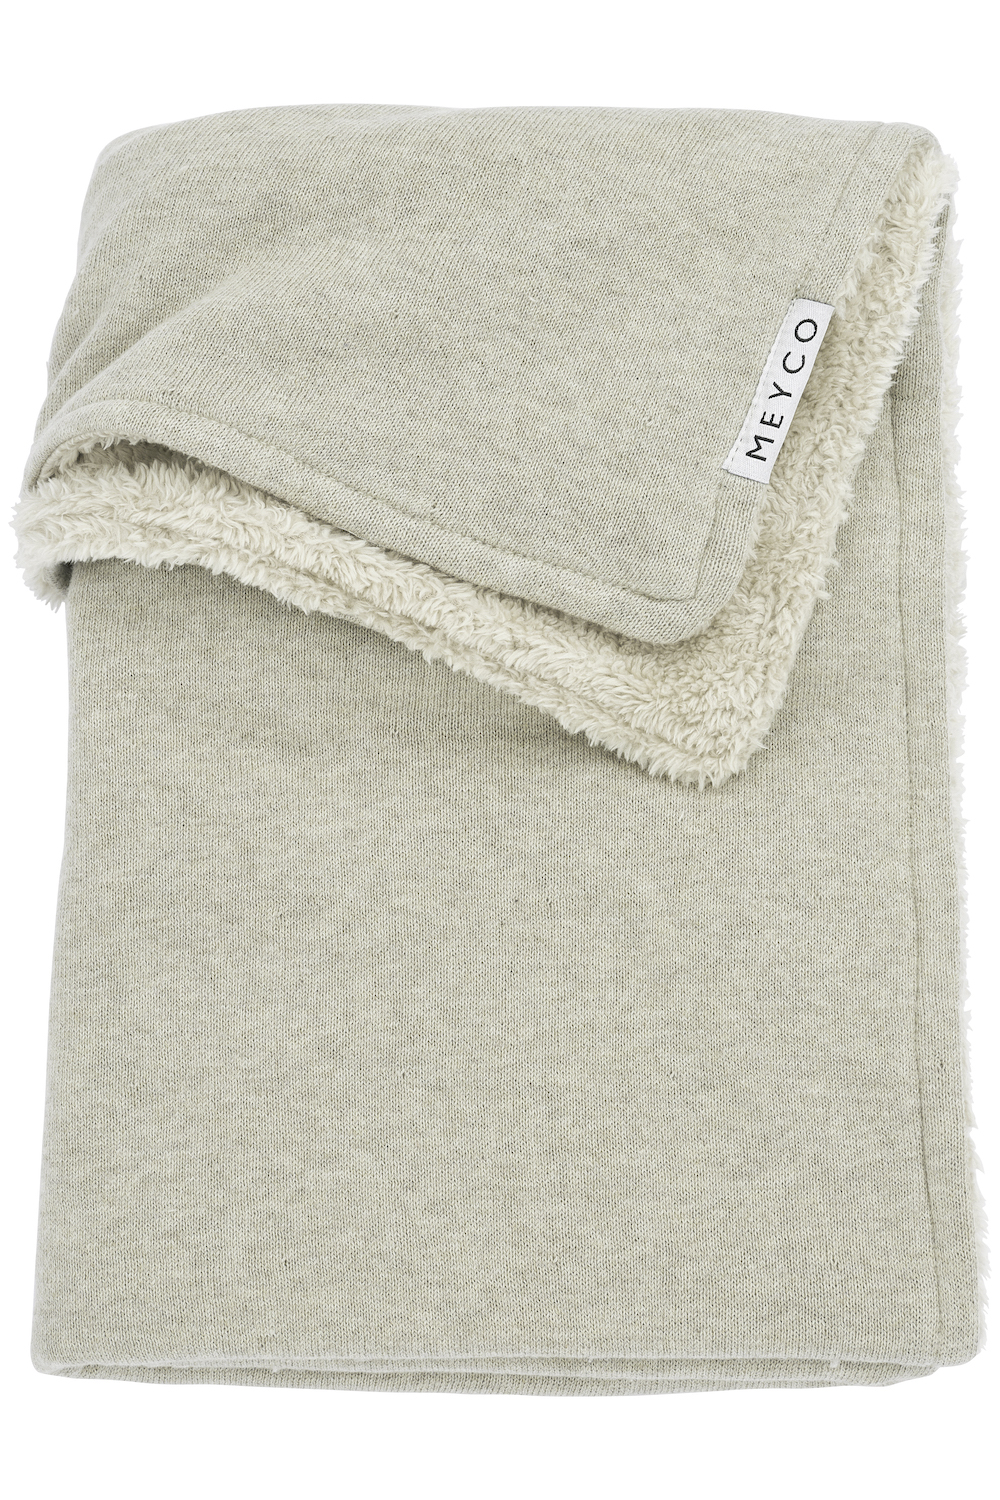 Crib bed blanket Knit Basic teddy - sand melange - 75x100cm